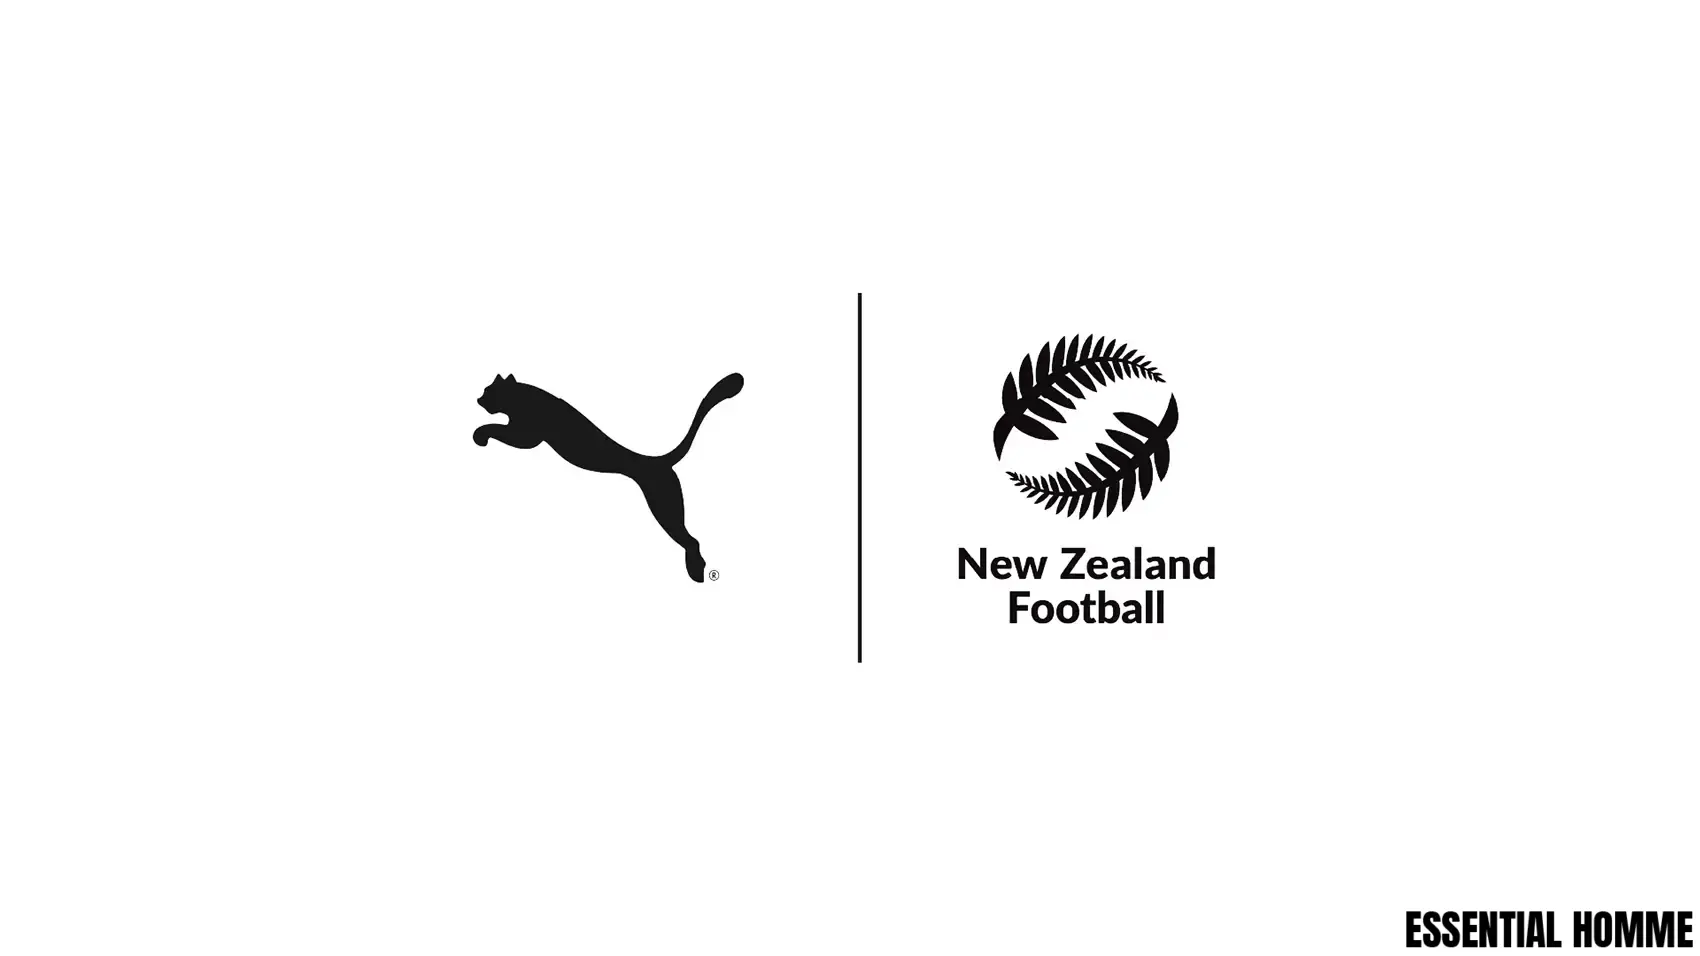 PUMA enters into a long-term partnership with New Zealand Football